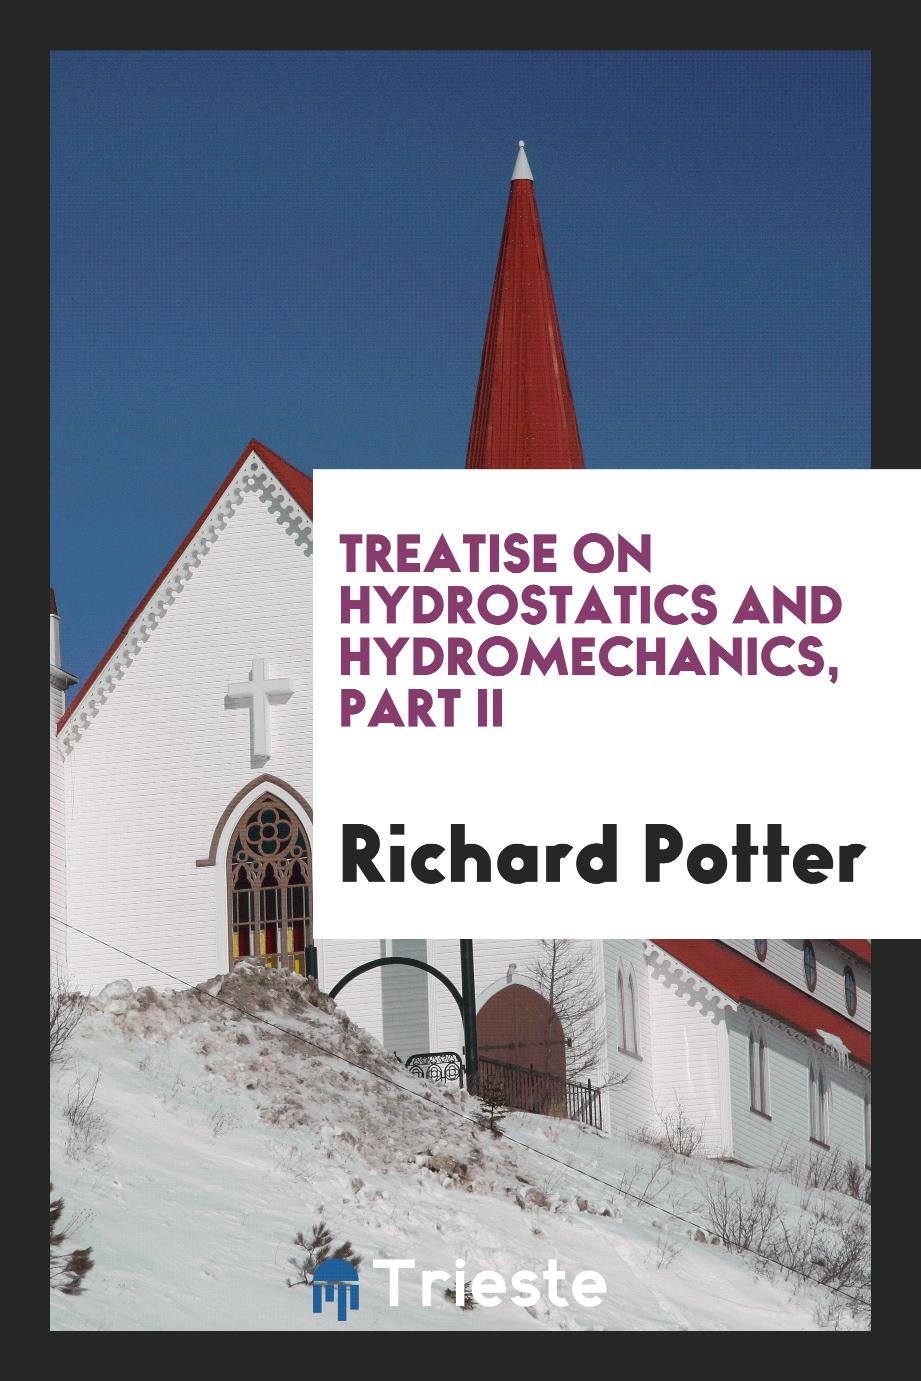 Treatise on hydrostatics and hydromechanics, part II